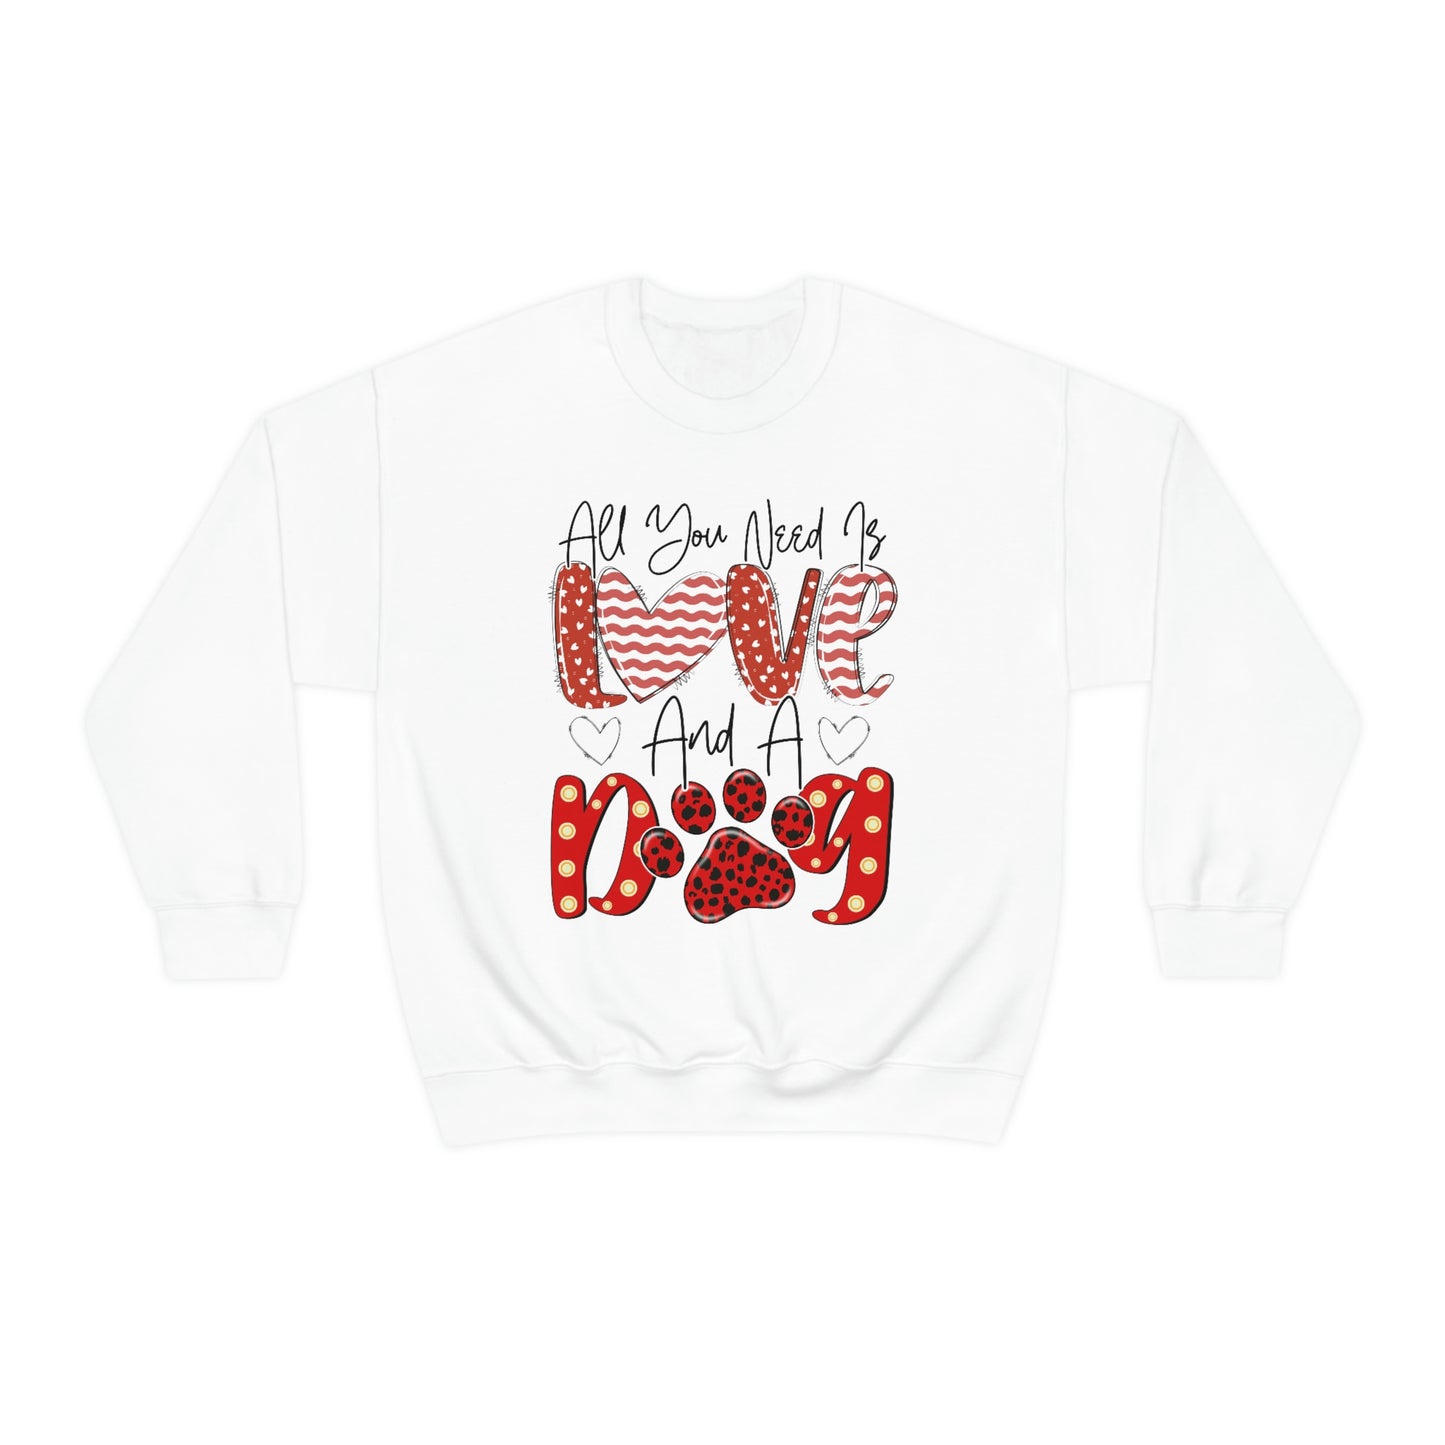 All I Need is Love and a Dog  Crewneck Sweatshirt